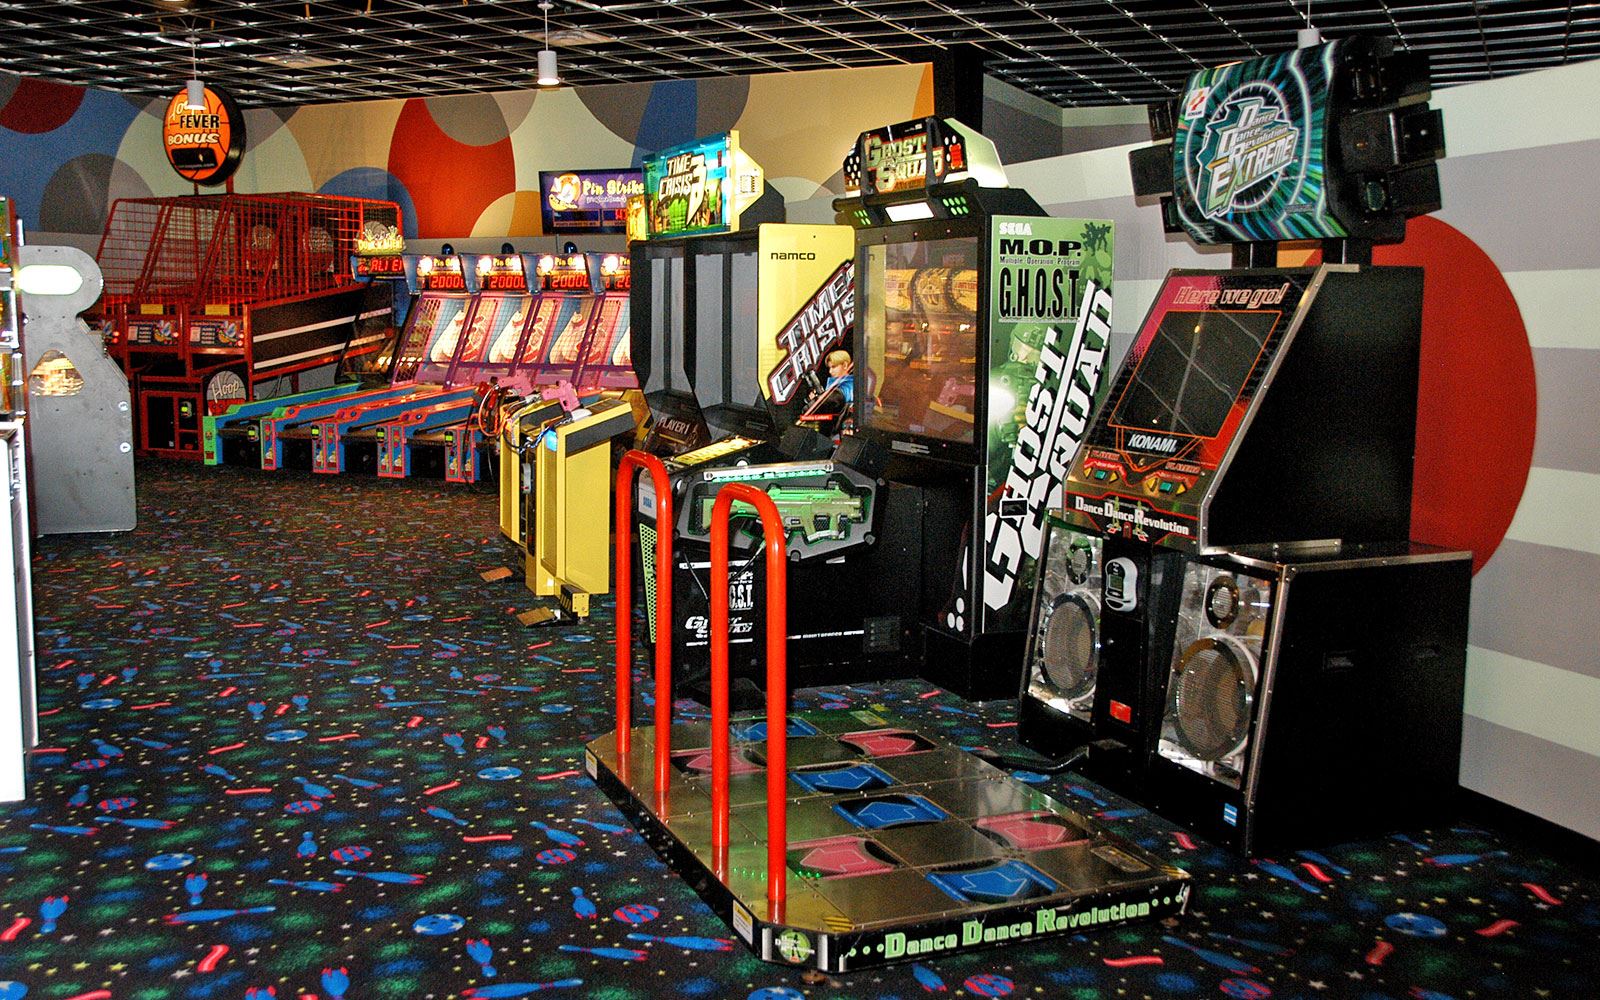 Pin Strikes Entertainment Center - Stockbridge, GA Bowling Alley